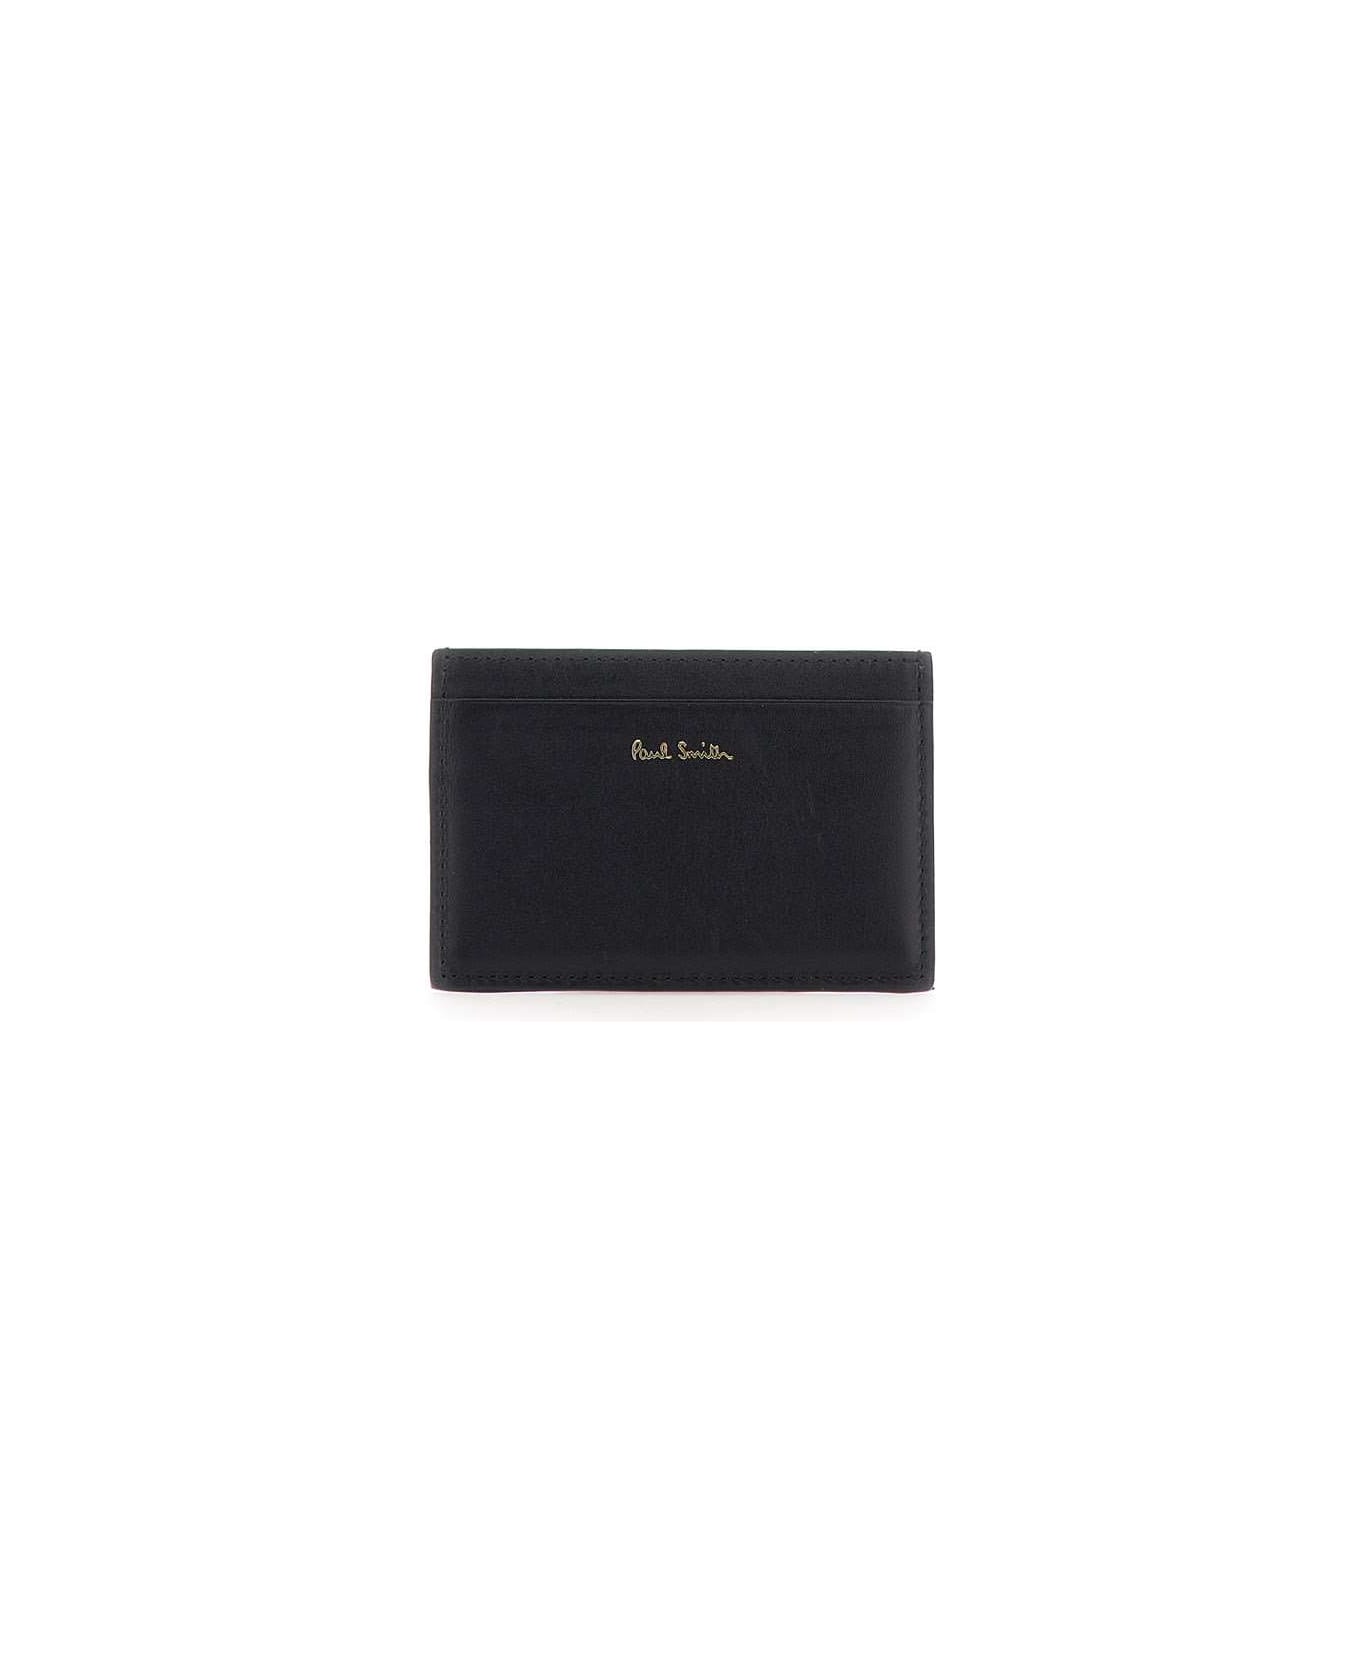 Paul Smith Card Holder Black Leather Wallet - BLACK